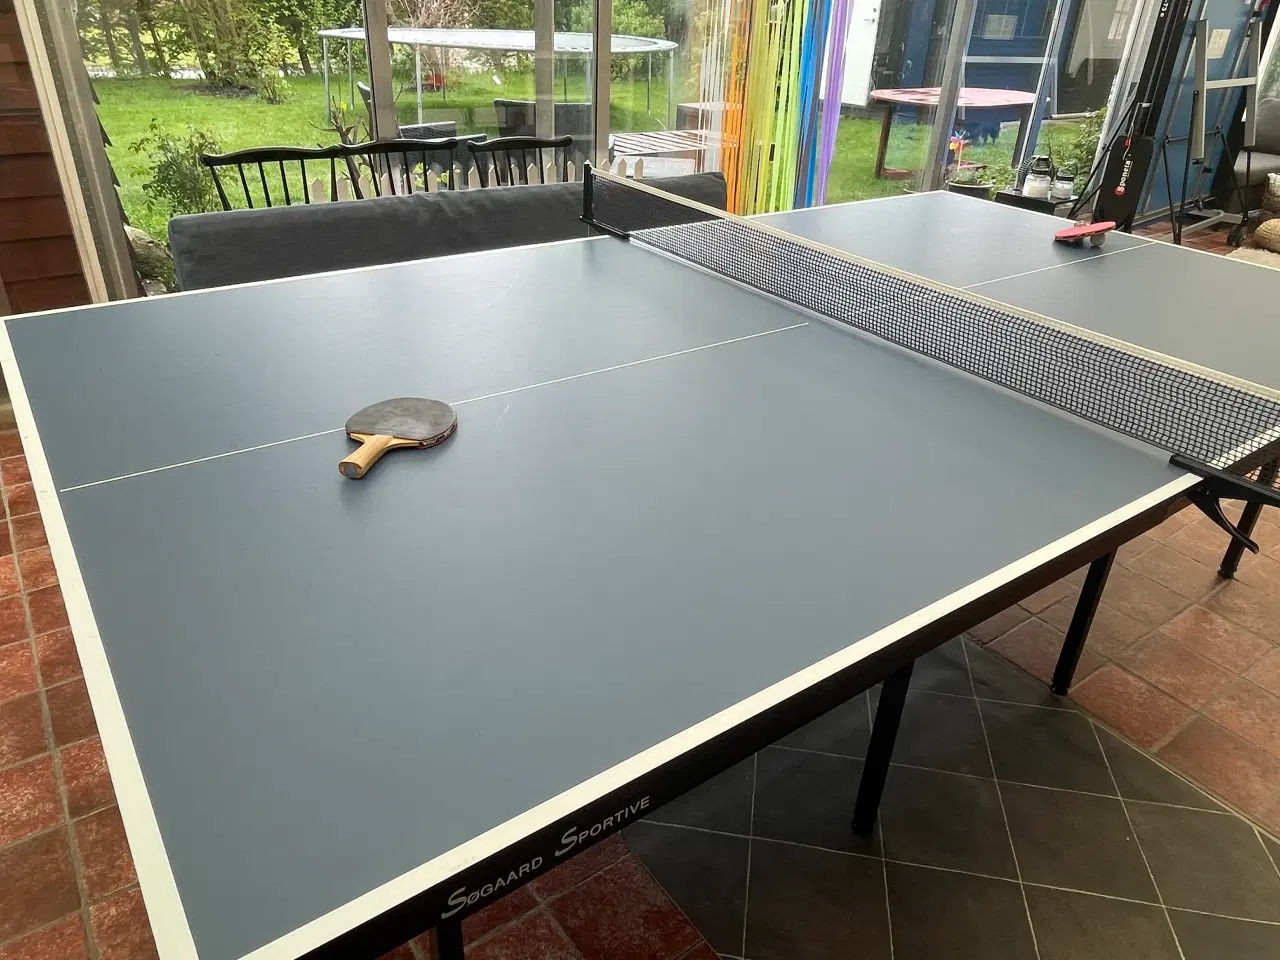 Billede 5 - Søgaard Sportive - meget fint bordtennisbord